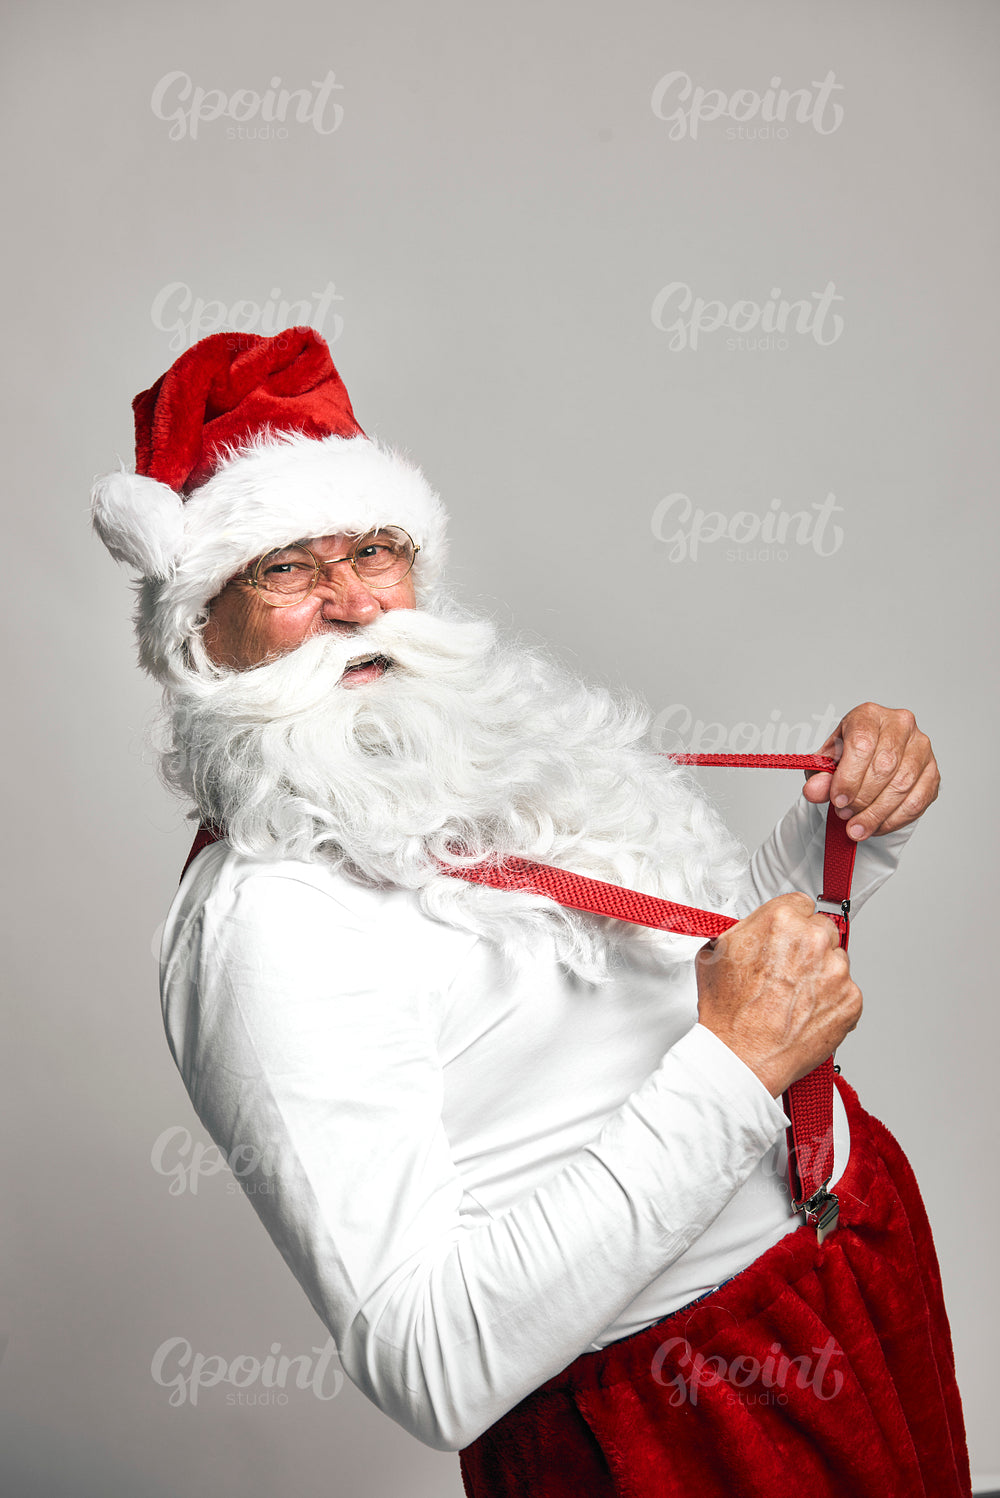 Dancing Santa Claus with red suspenders